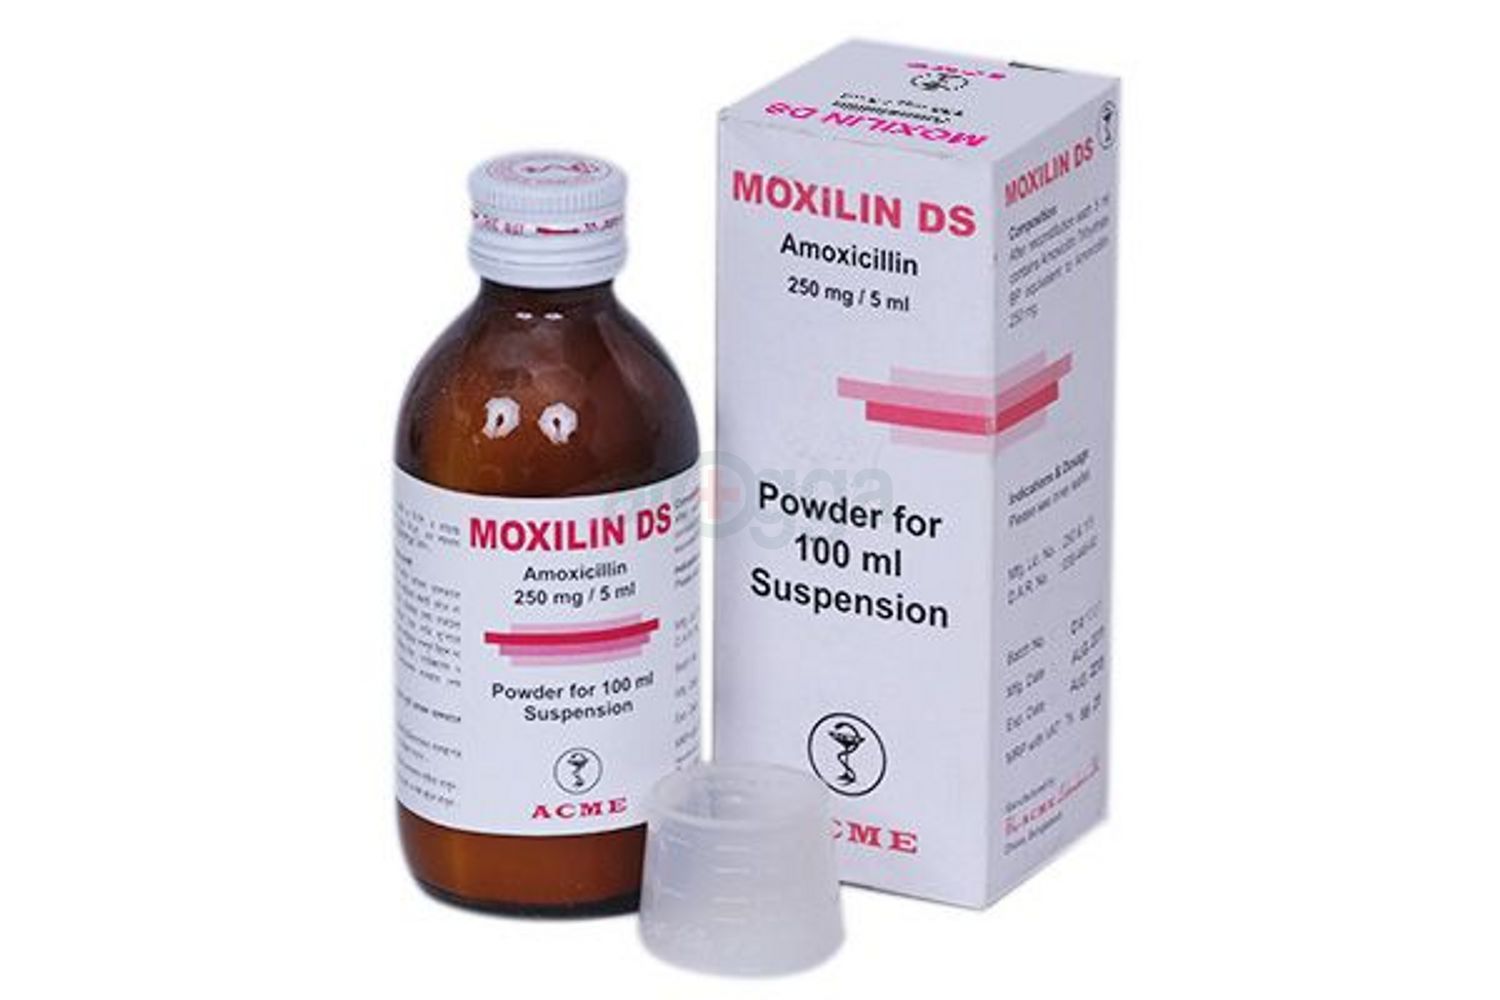 Moxilin DS